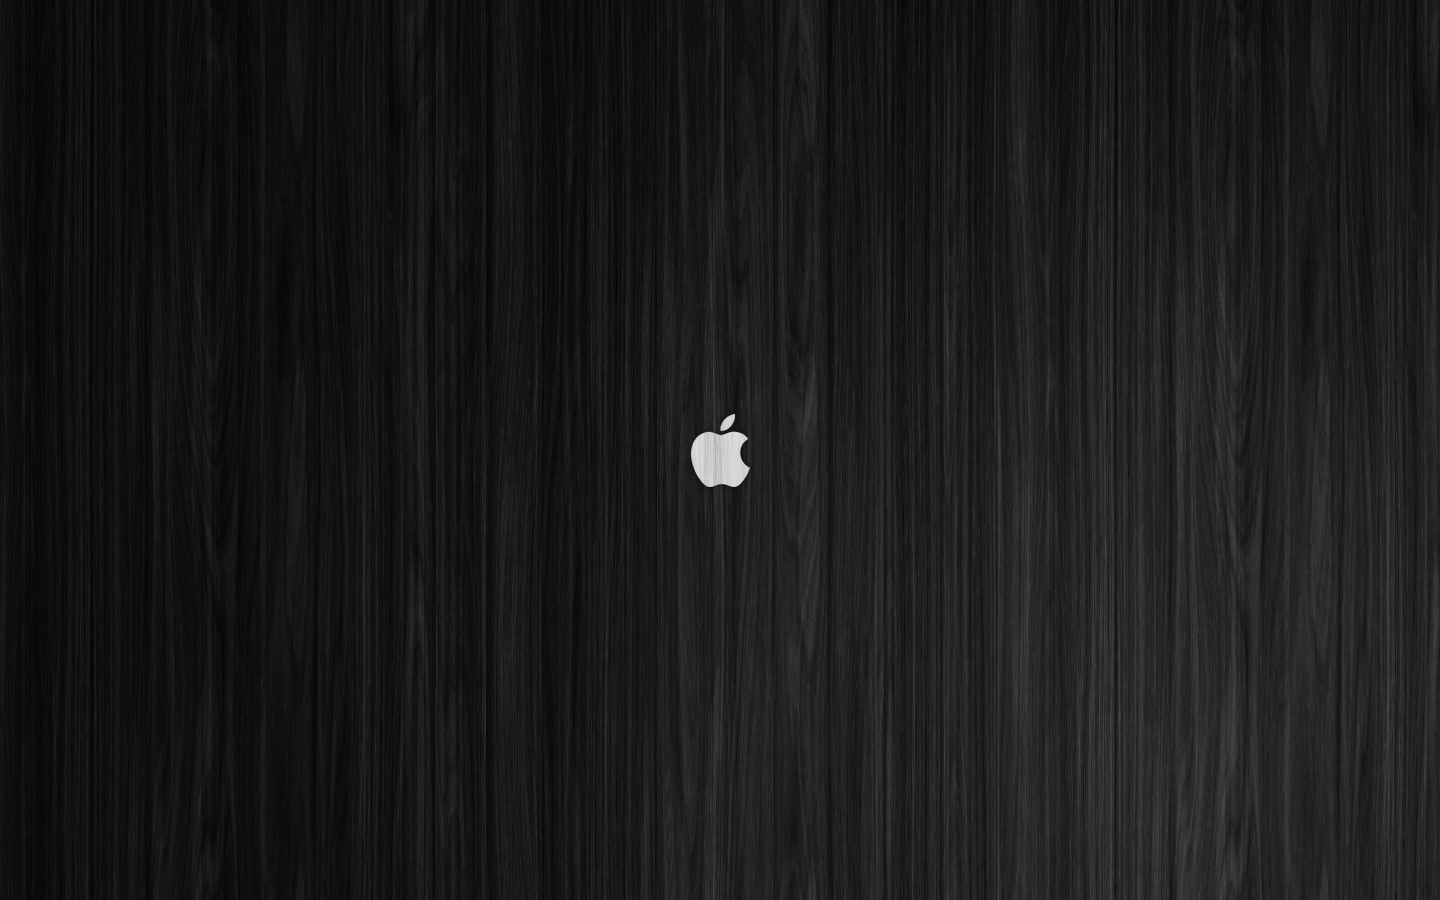 White Apple On Black Wood Mac Wallpaper By Zgraphx